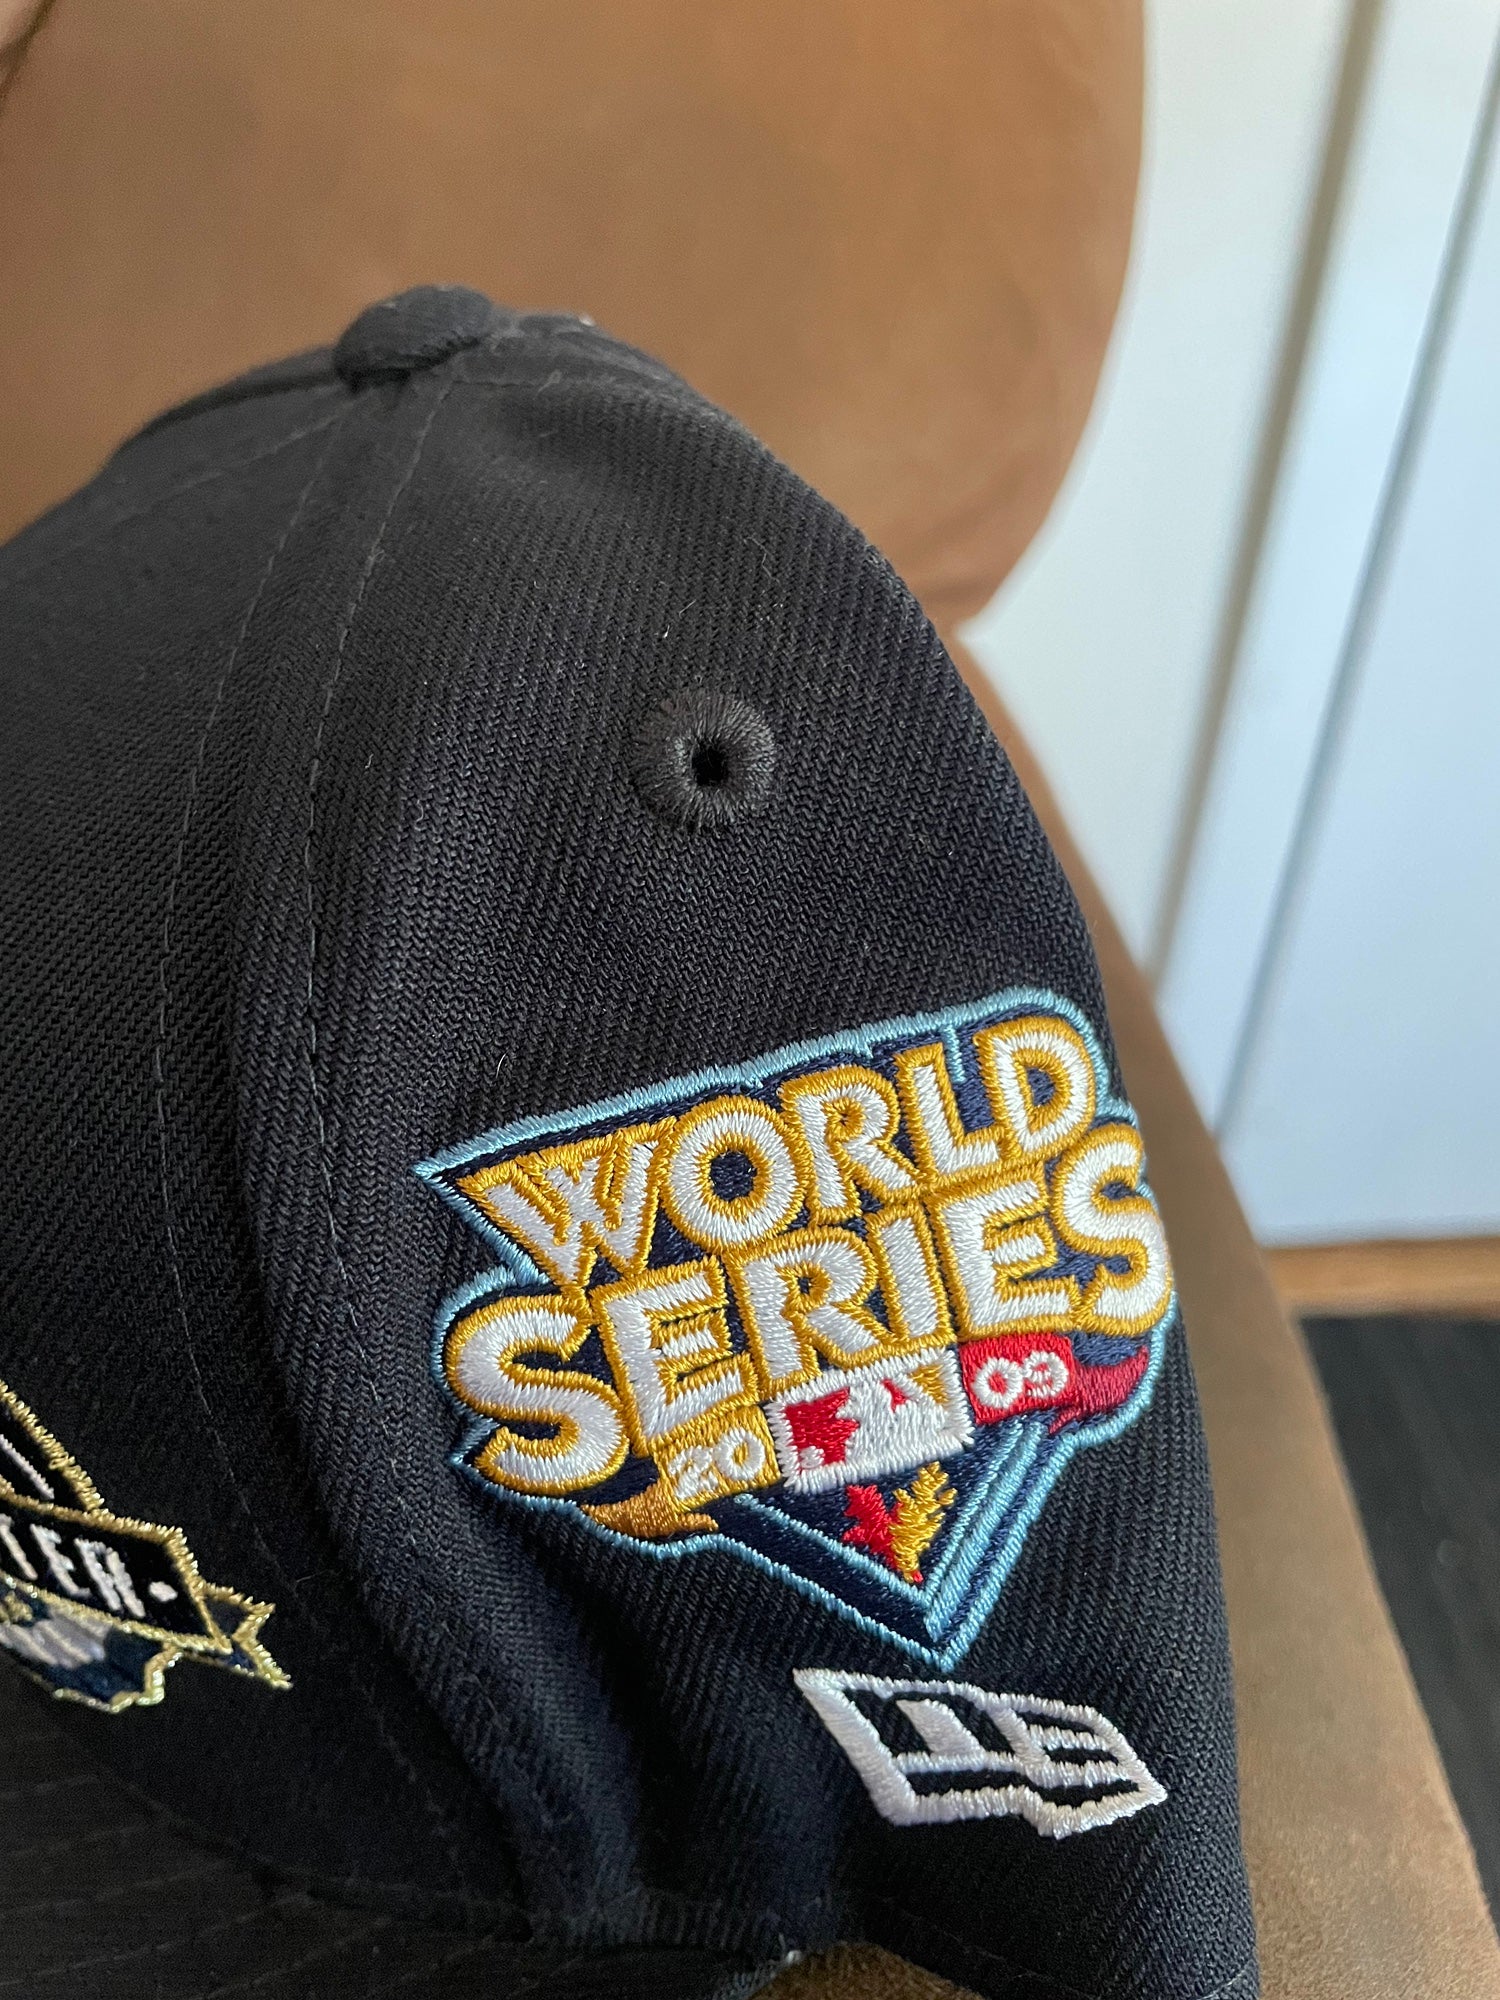 New Era 59FIFTY MLB New York Yankees Derek Jeter 5X World Series Champion Fitted Hat 7 1/8